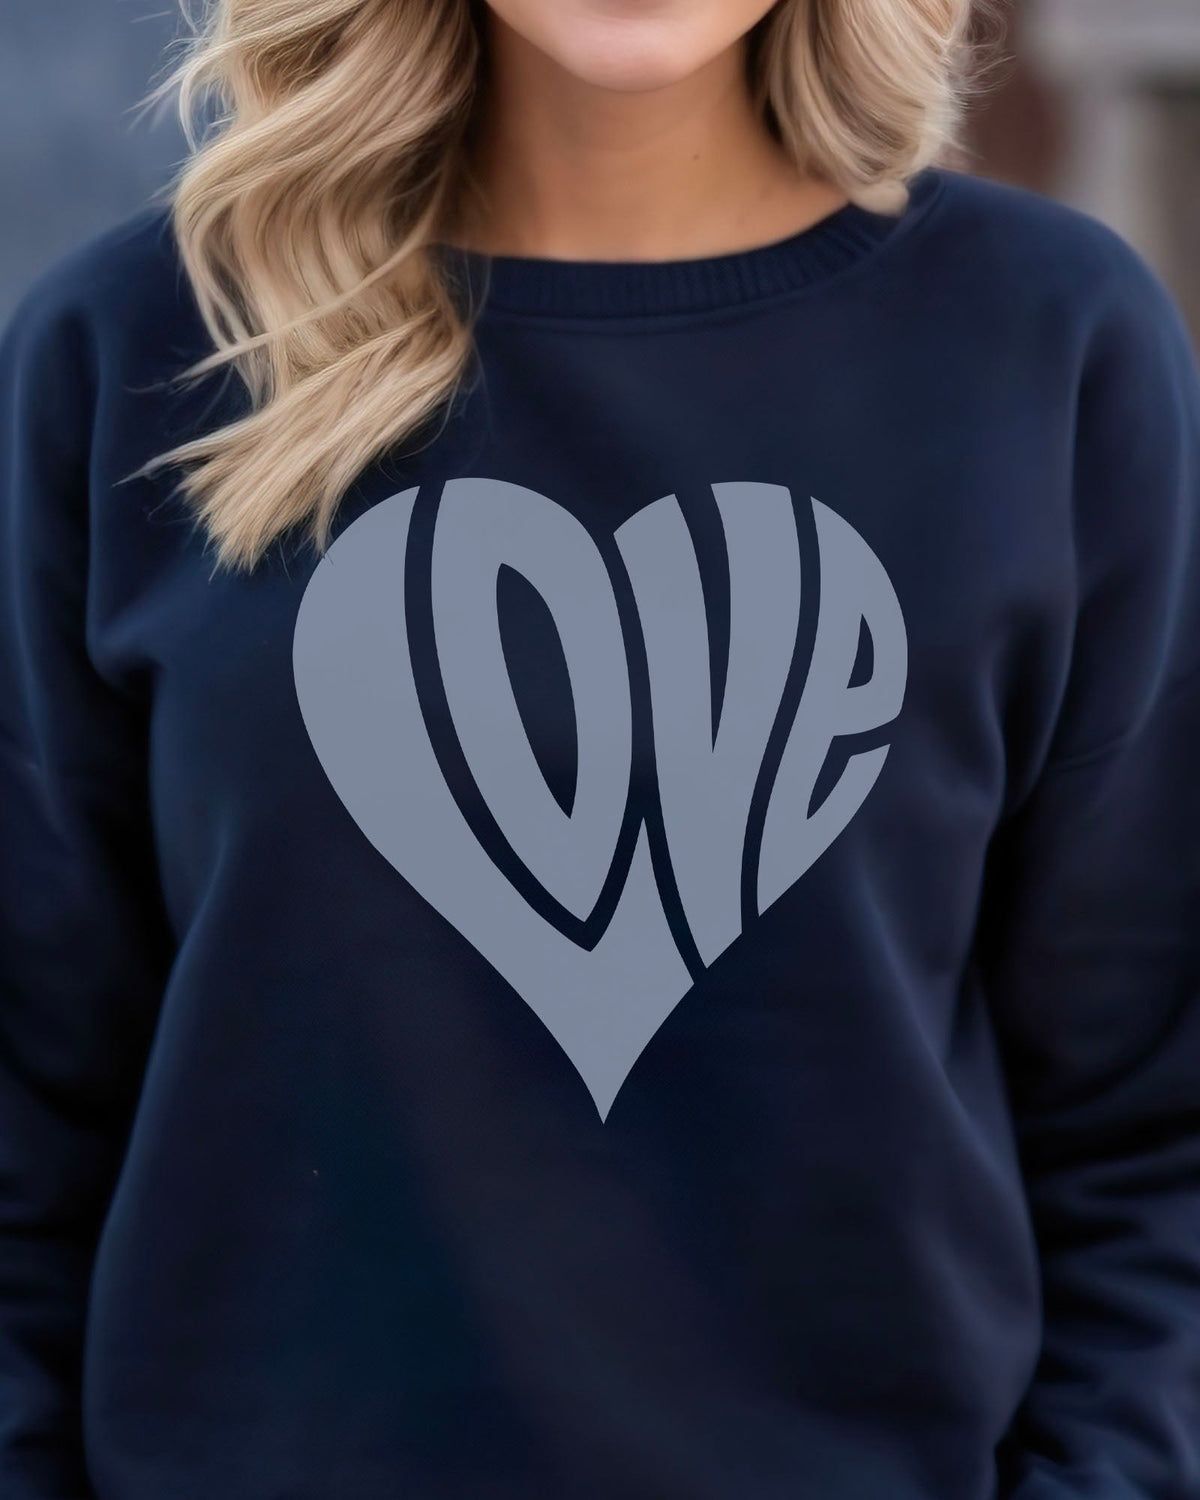 Love Heart Sweatshirt